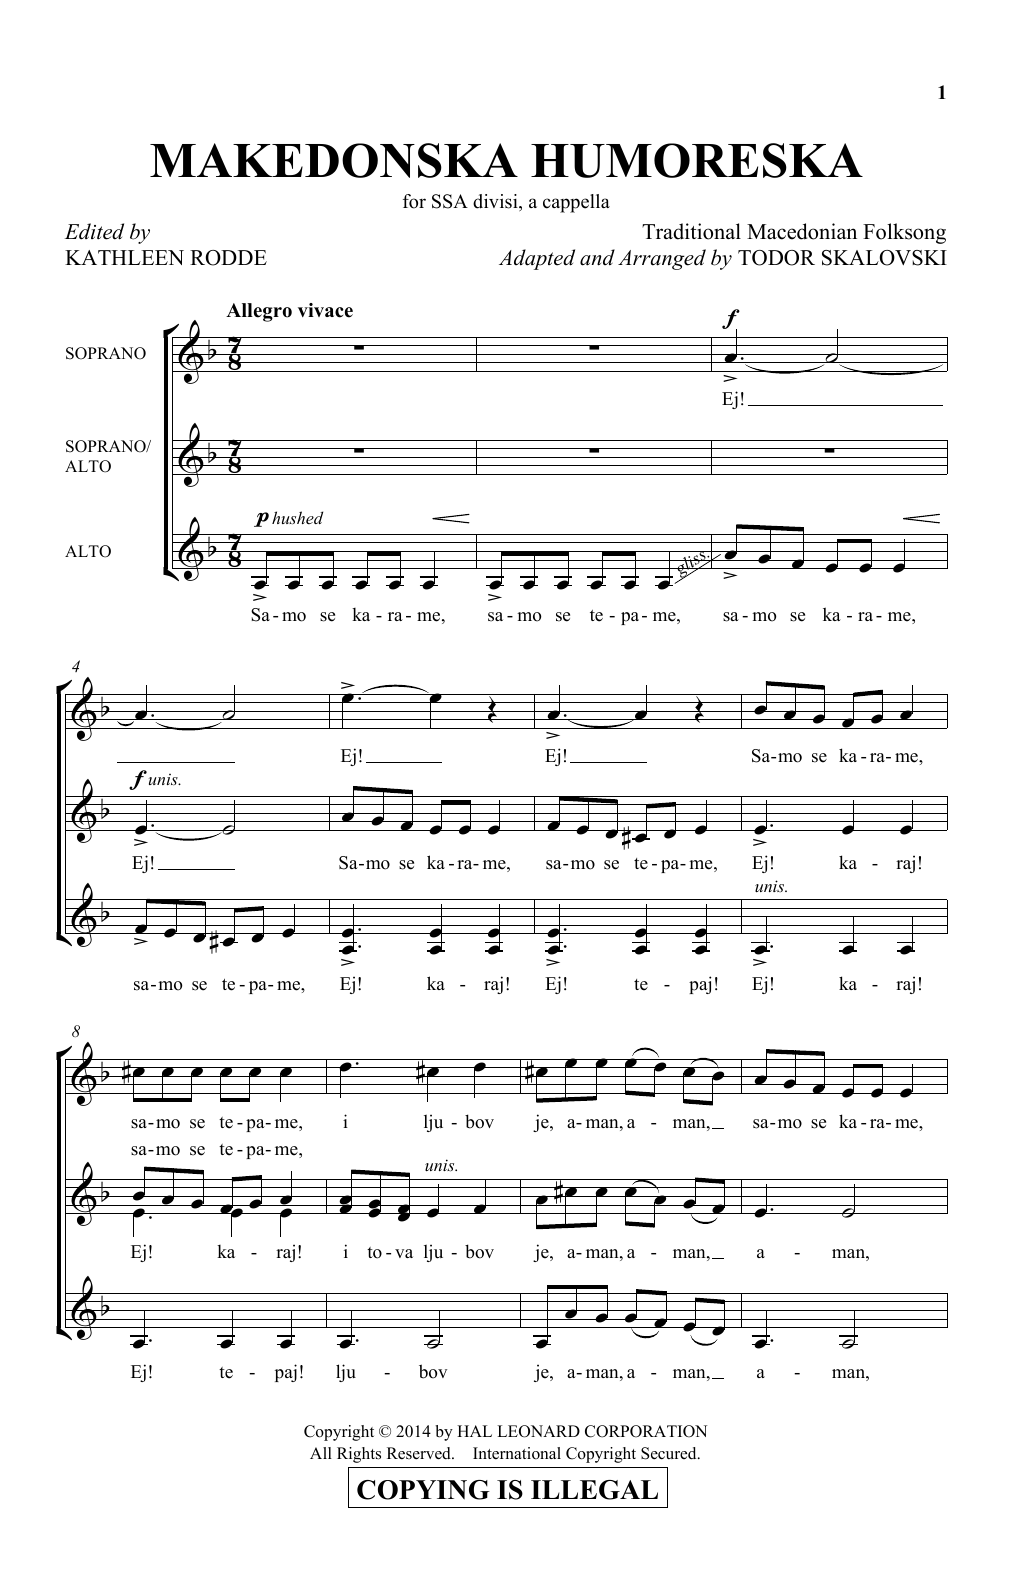 Download Kathleen Rodde Makedonska Humoreska Sheet Music and learn how to play SSA PDF digital score in minutes